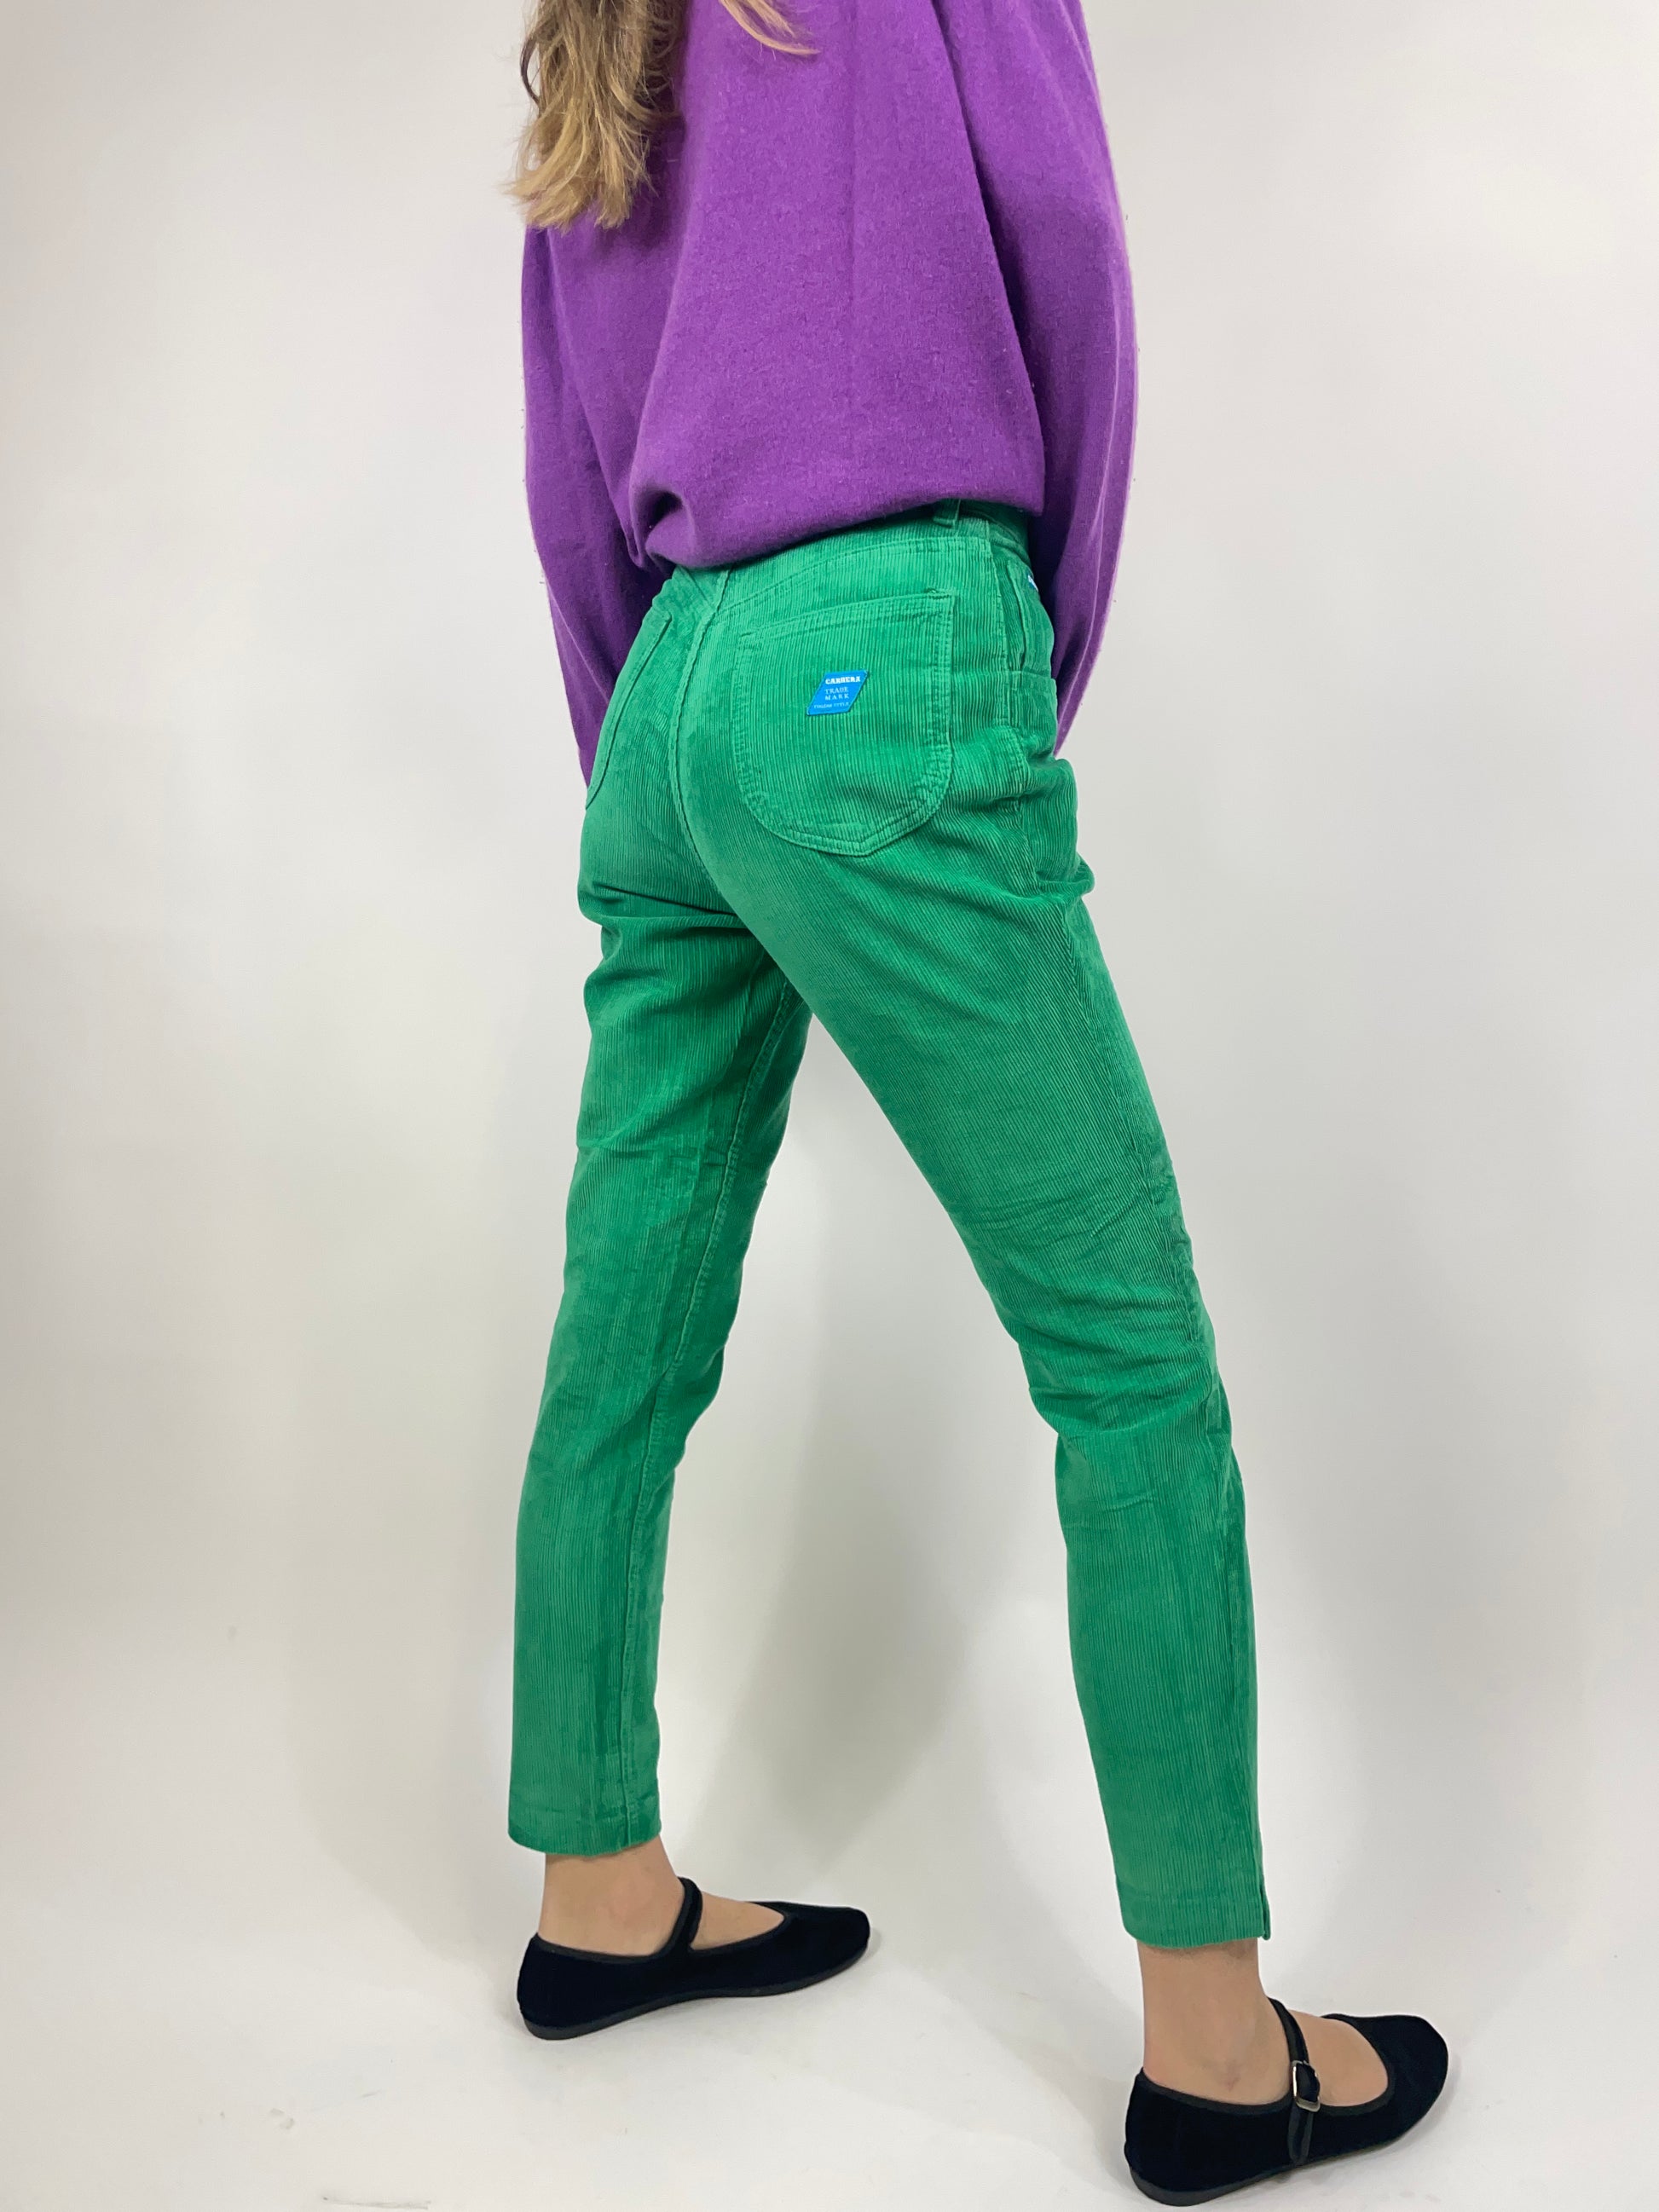 pantalone-carrera-vintage-velluto-millerighe-colore-verde